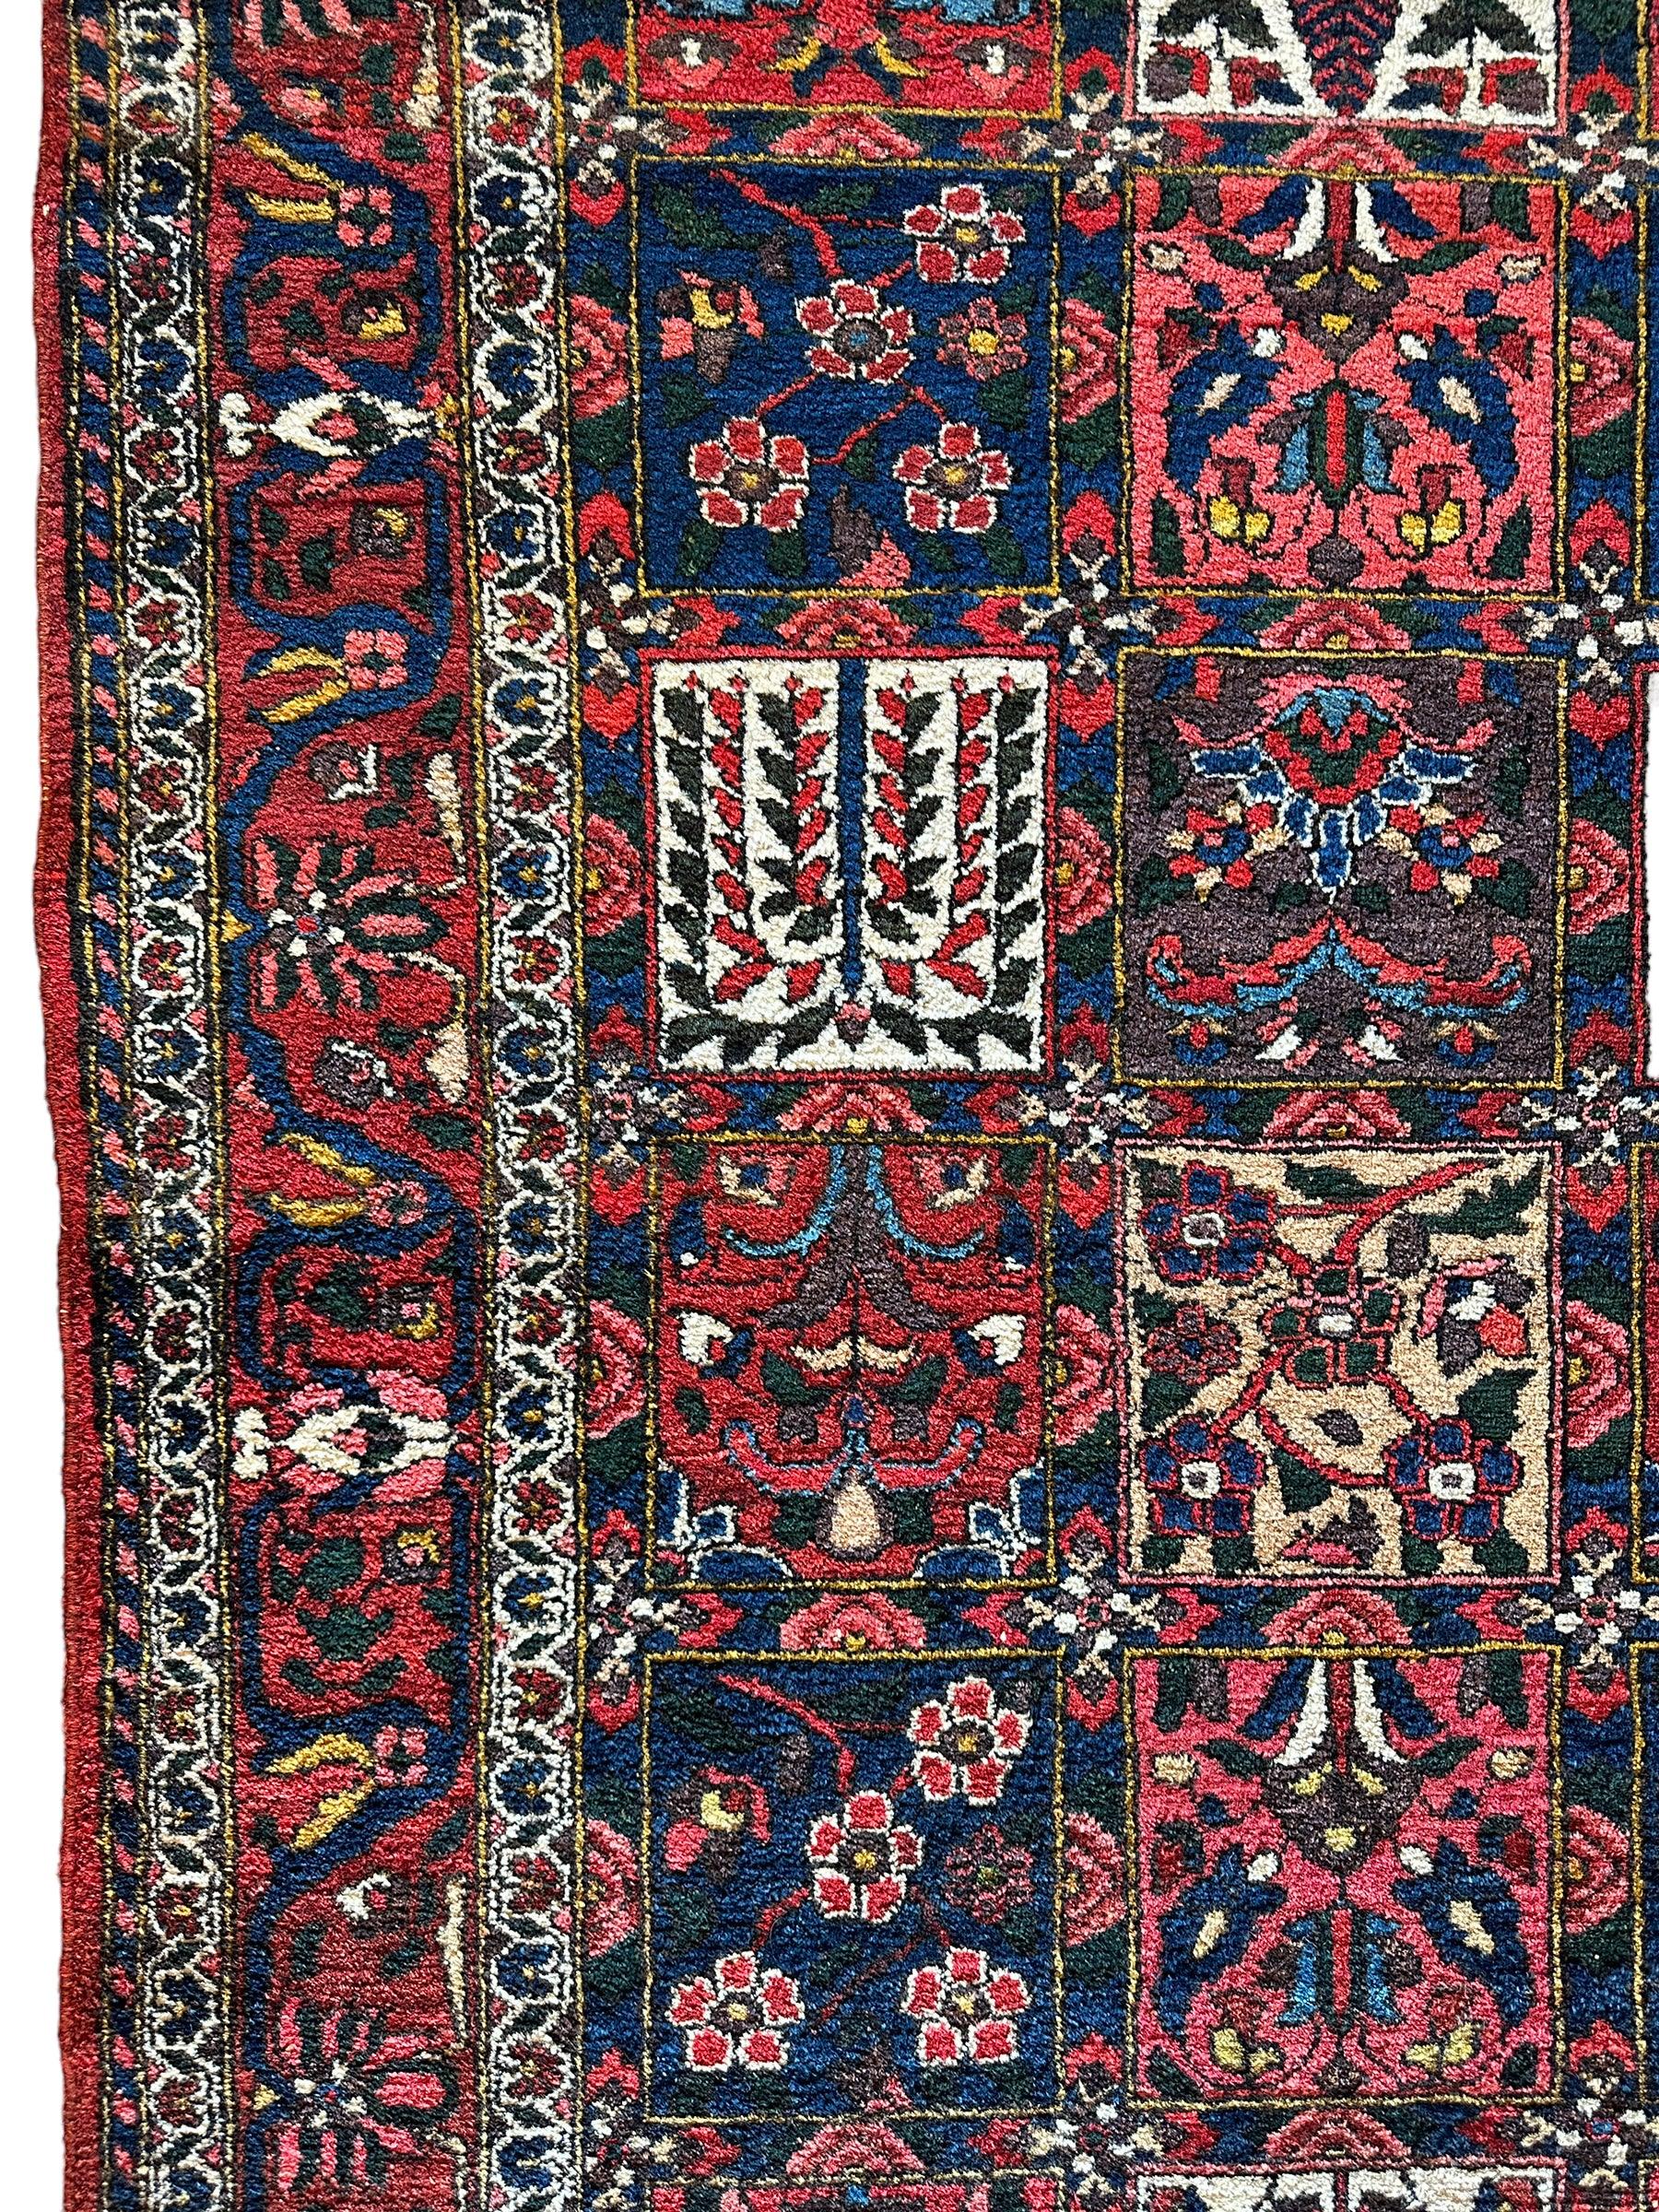 Antique Circa 1920 Decorative Four Seasons Bakhtiari Rug 4’6” x 6’7”